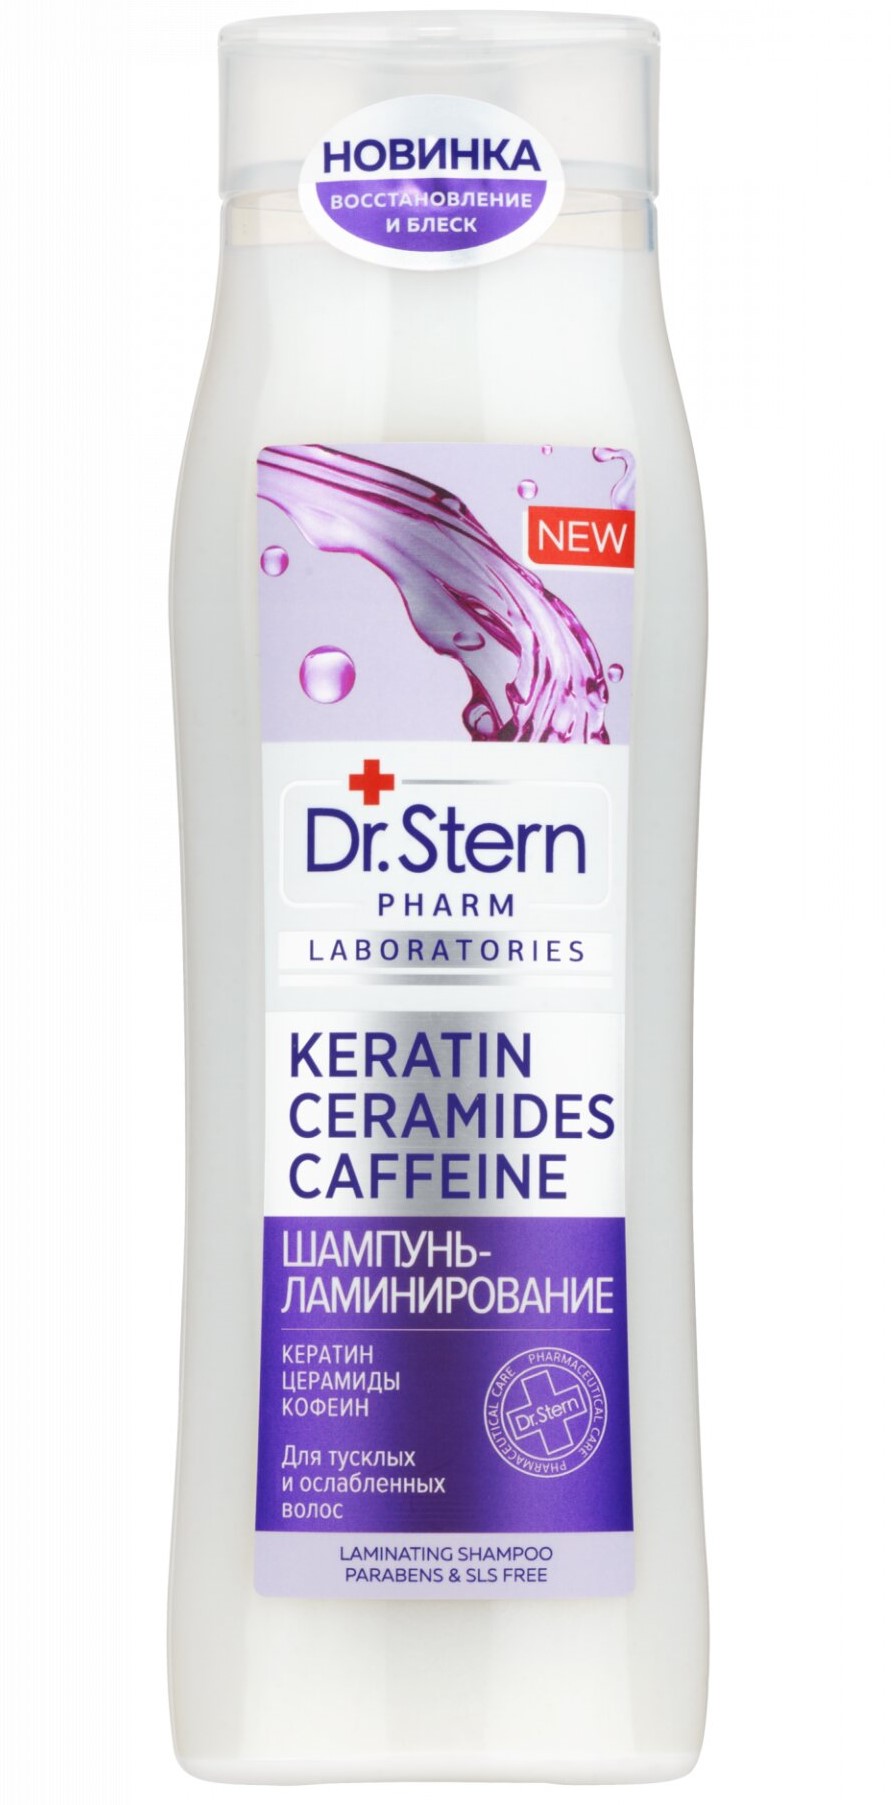 Dr. Stern Шампунь-ламинирование "Кератин, церамиды, кофеин", 400 мл (Dr. Stern, Для волос) от Socolor